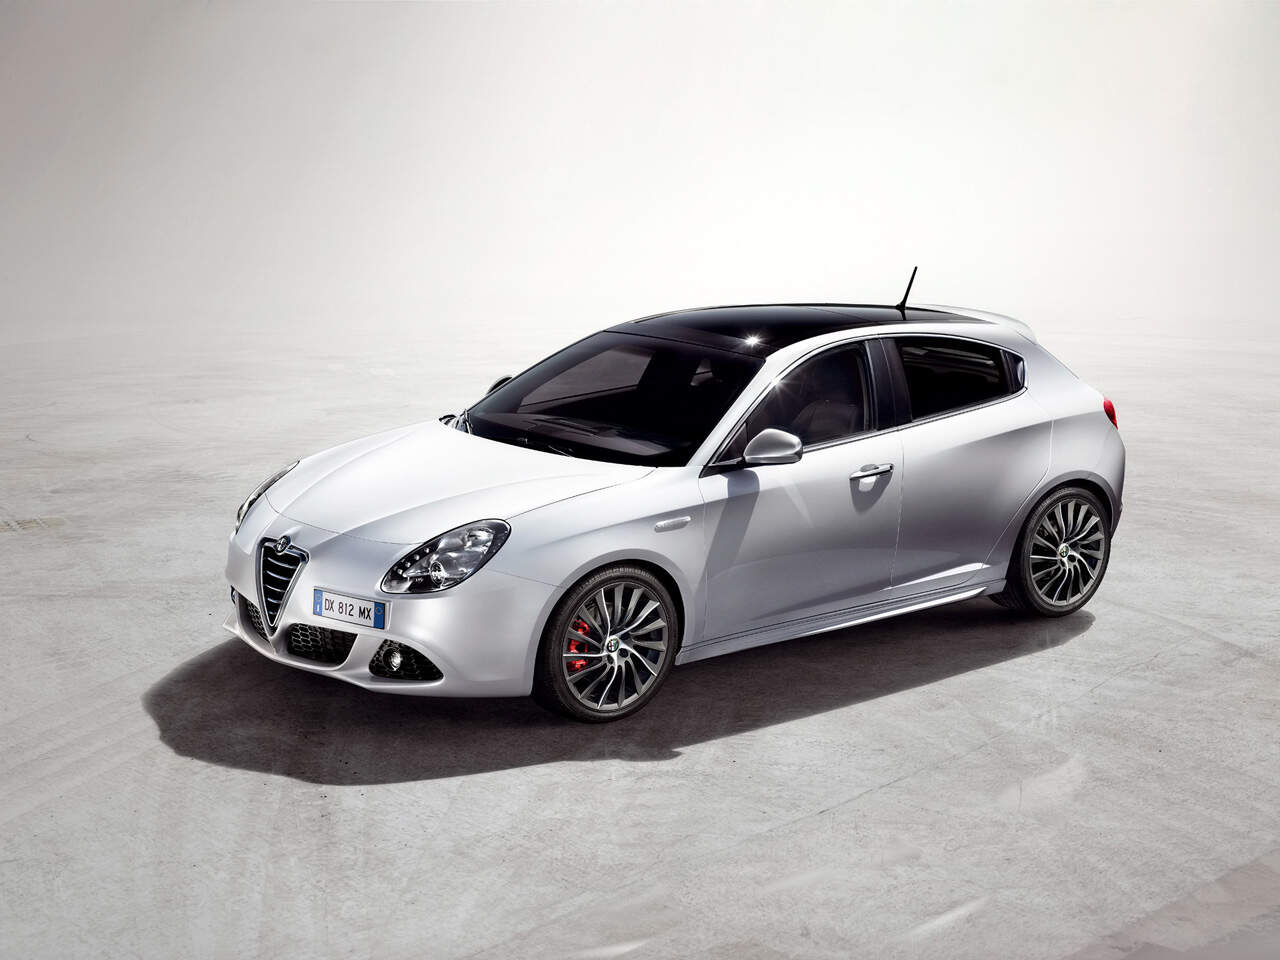 2010-Alfa-Romeo-Giulietta.jpg